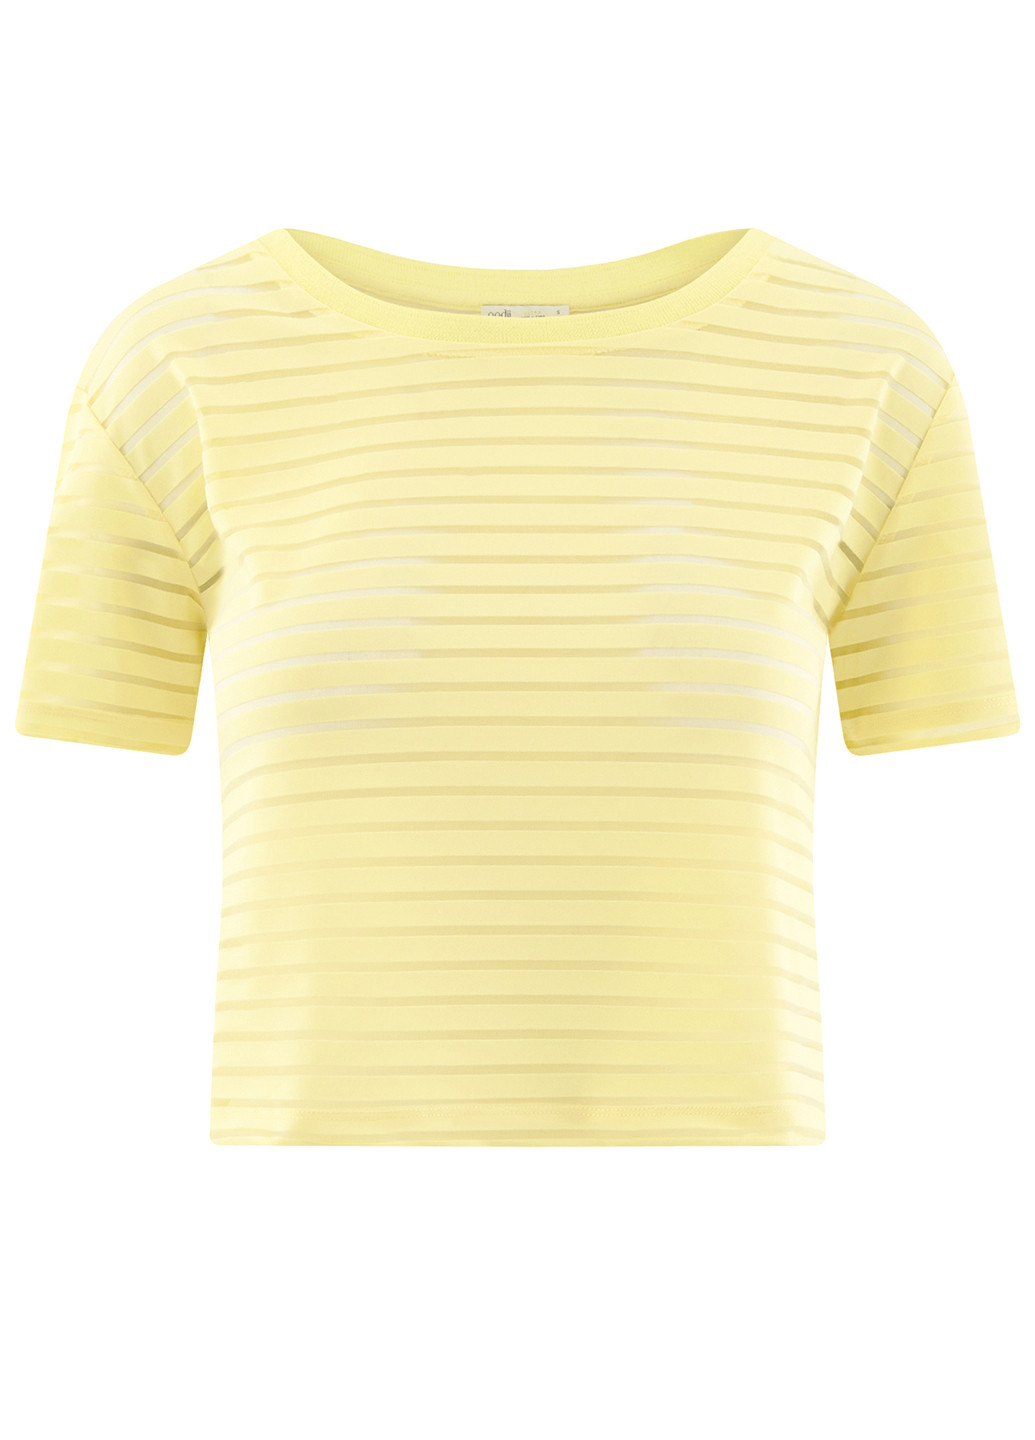 Желтая летняя футболка Oodji